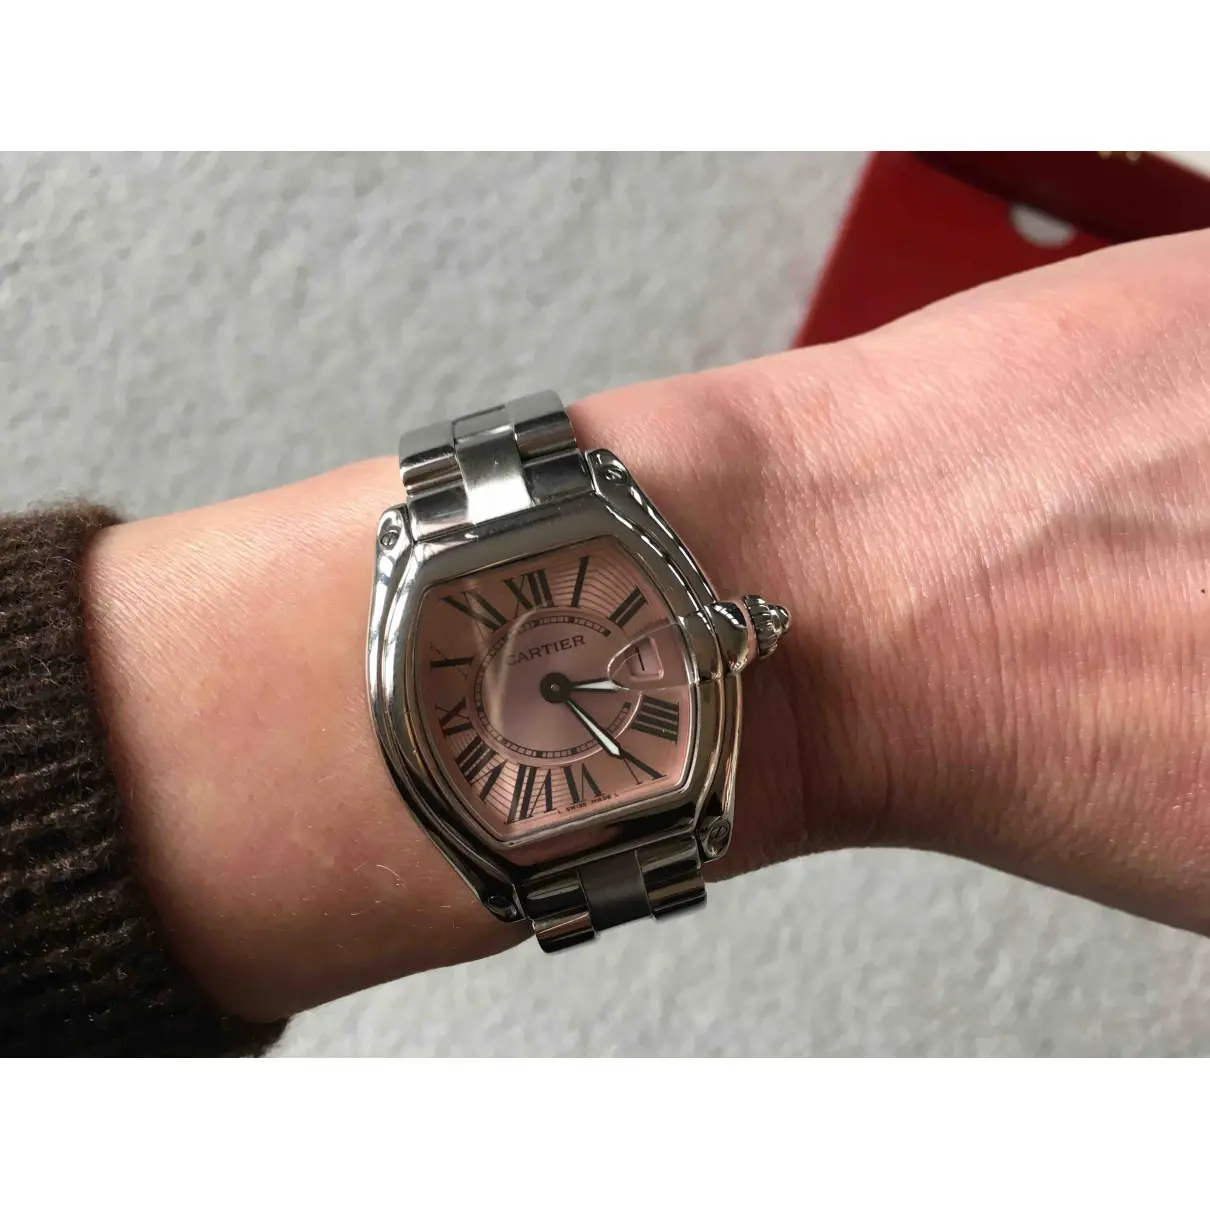 Cartier Roadster watch for sale